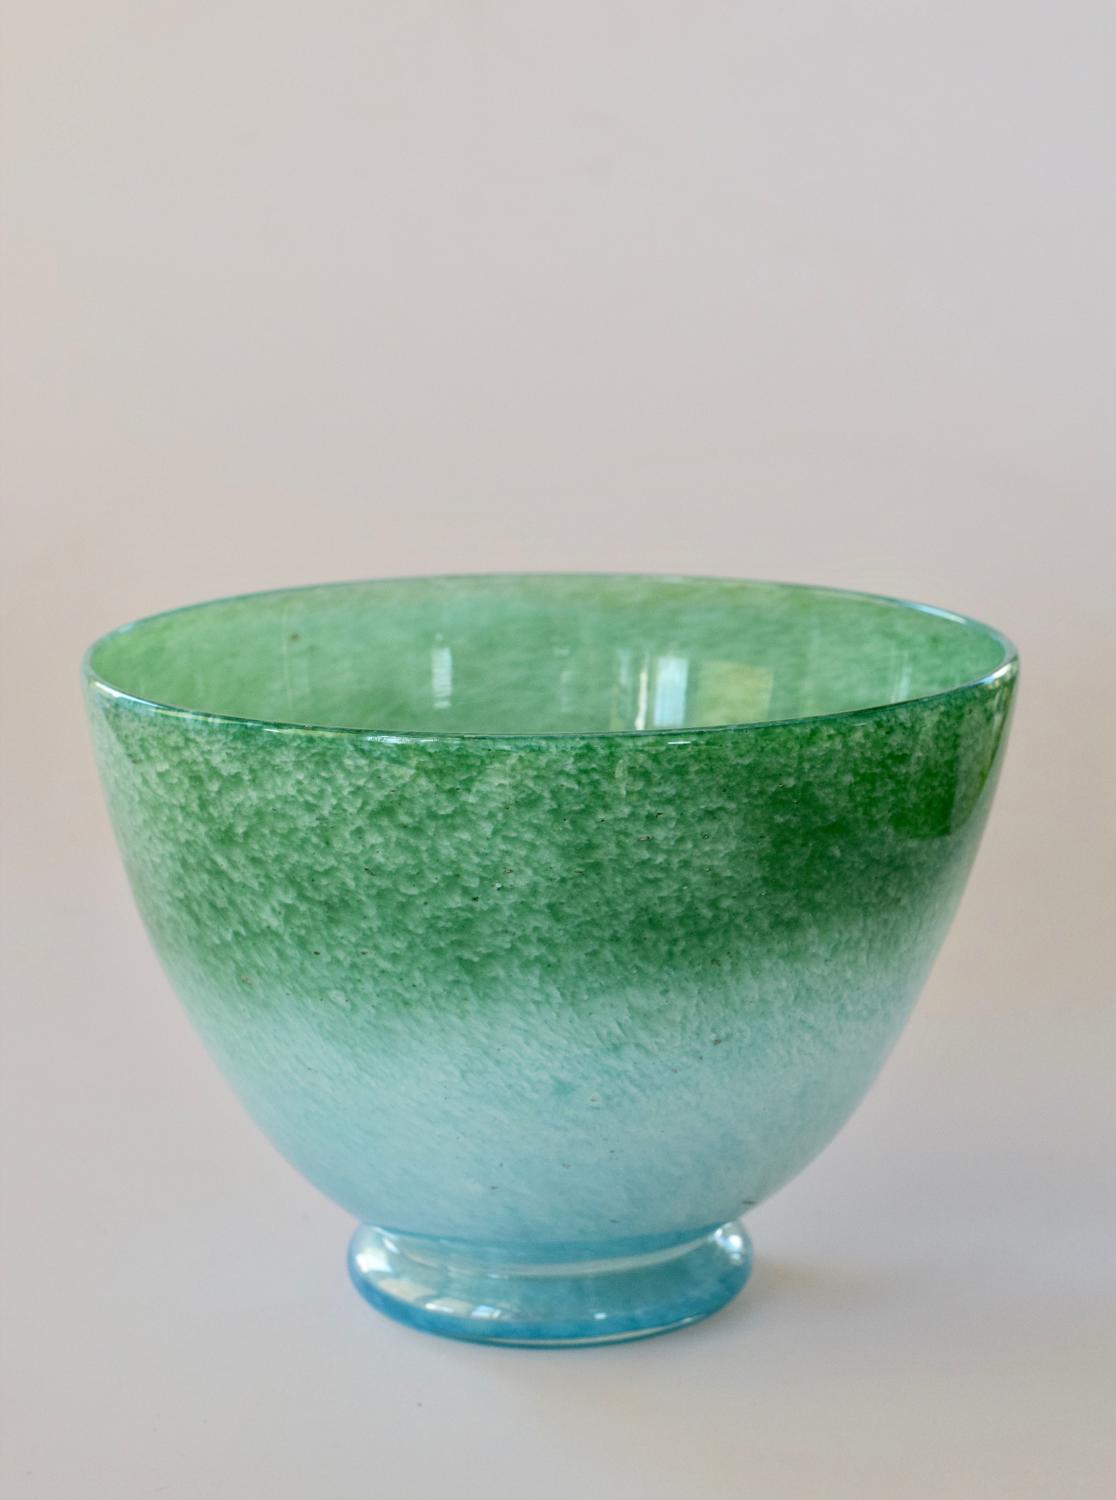 Cloudy green bowl